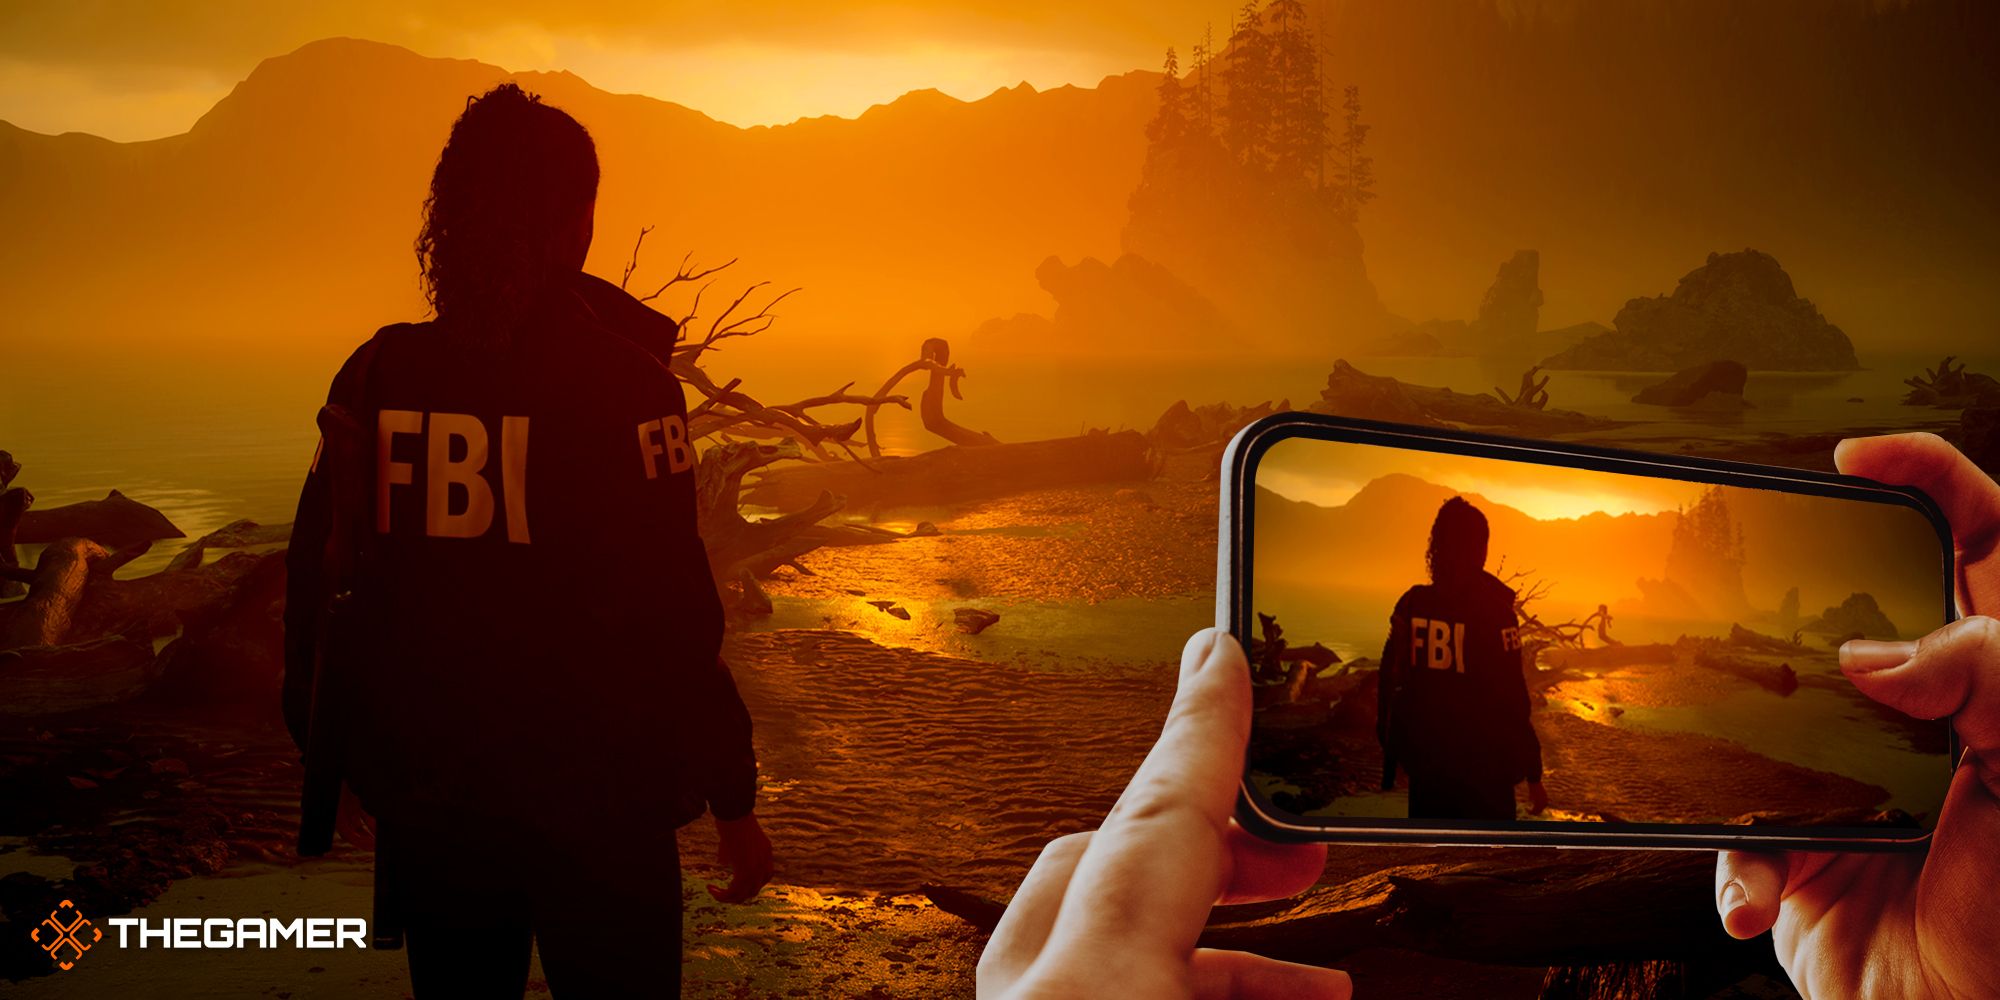 Alan Wake 2 Photo Mode: Can You Take Photos? - GameRevolution